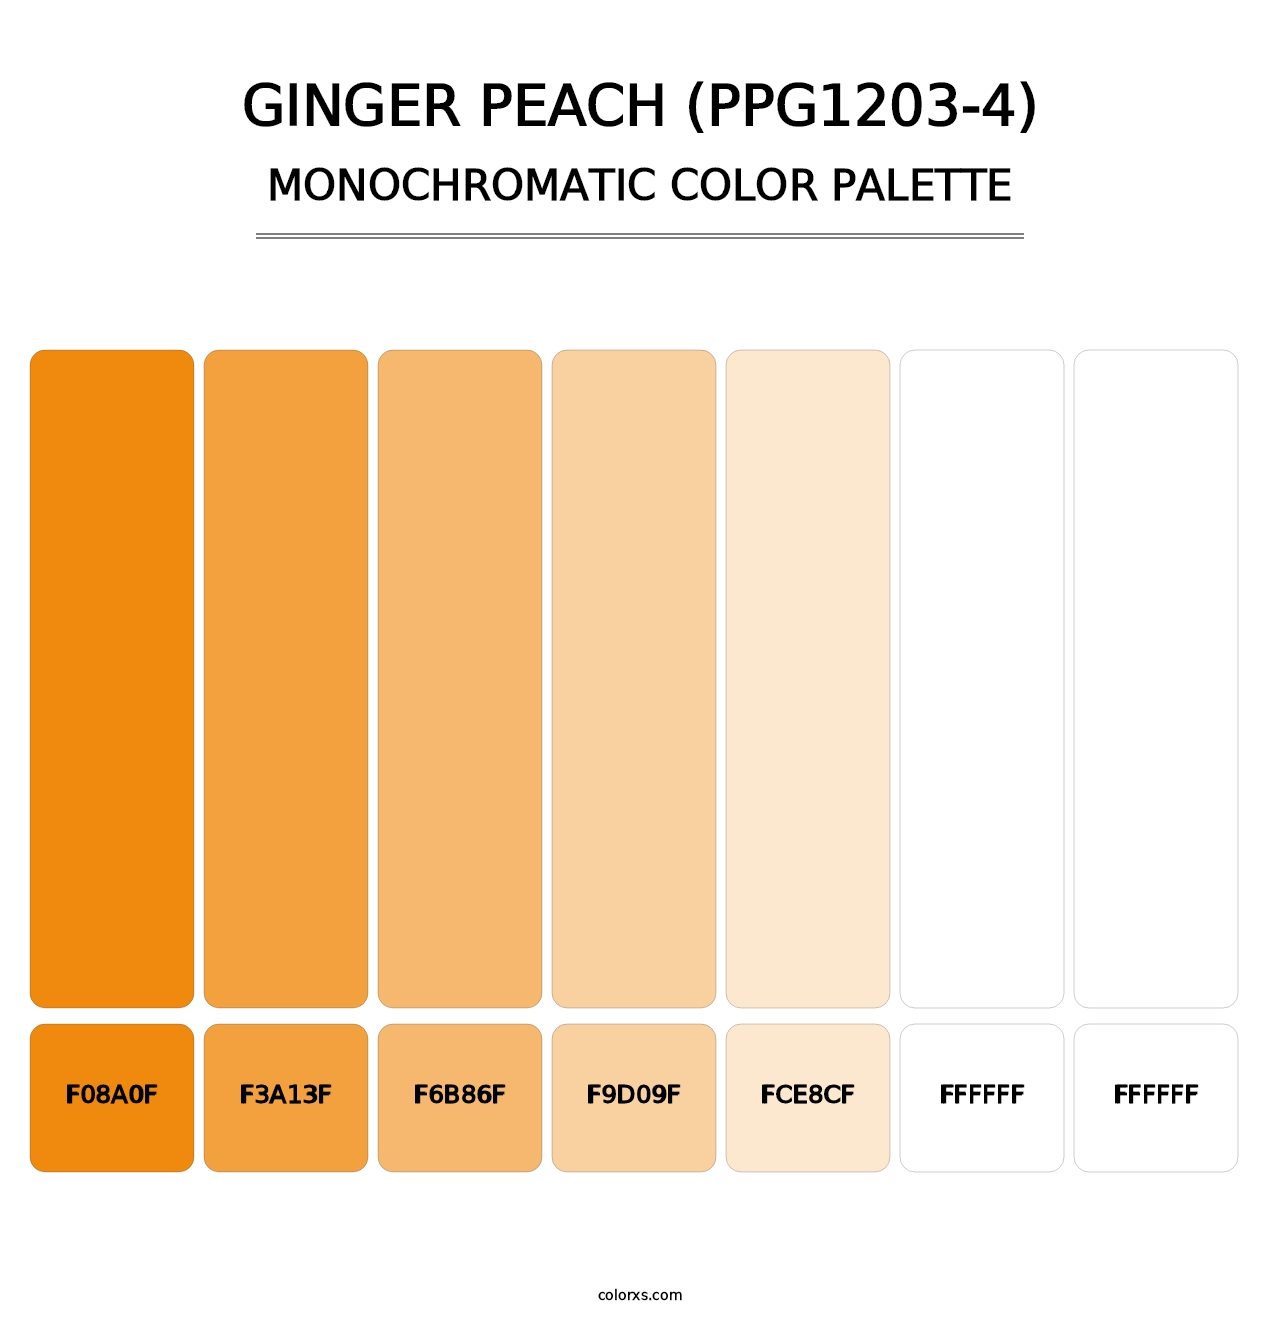 Ginger Peach (PPG1203-4) - Monochromatic Color Palette